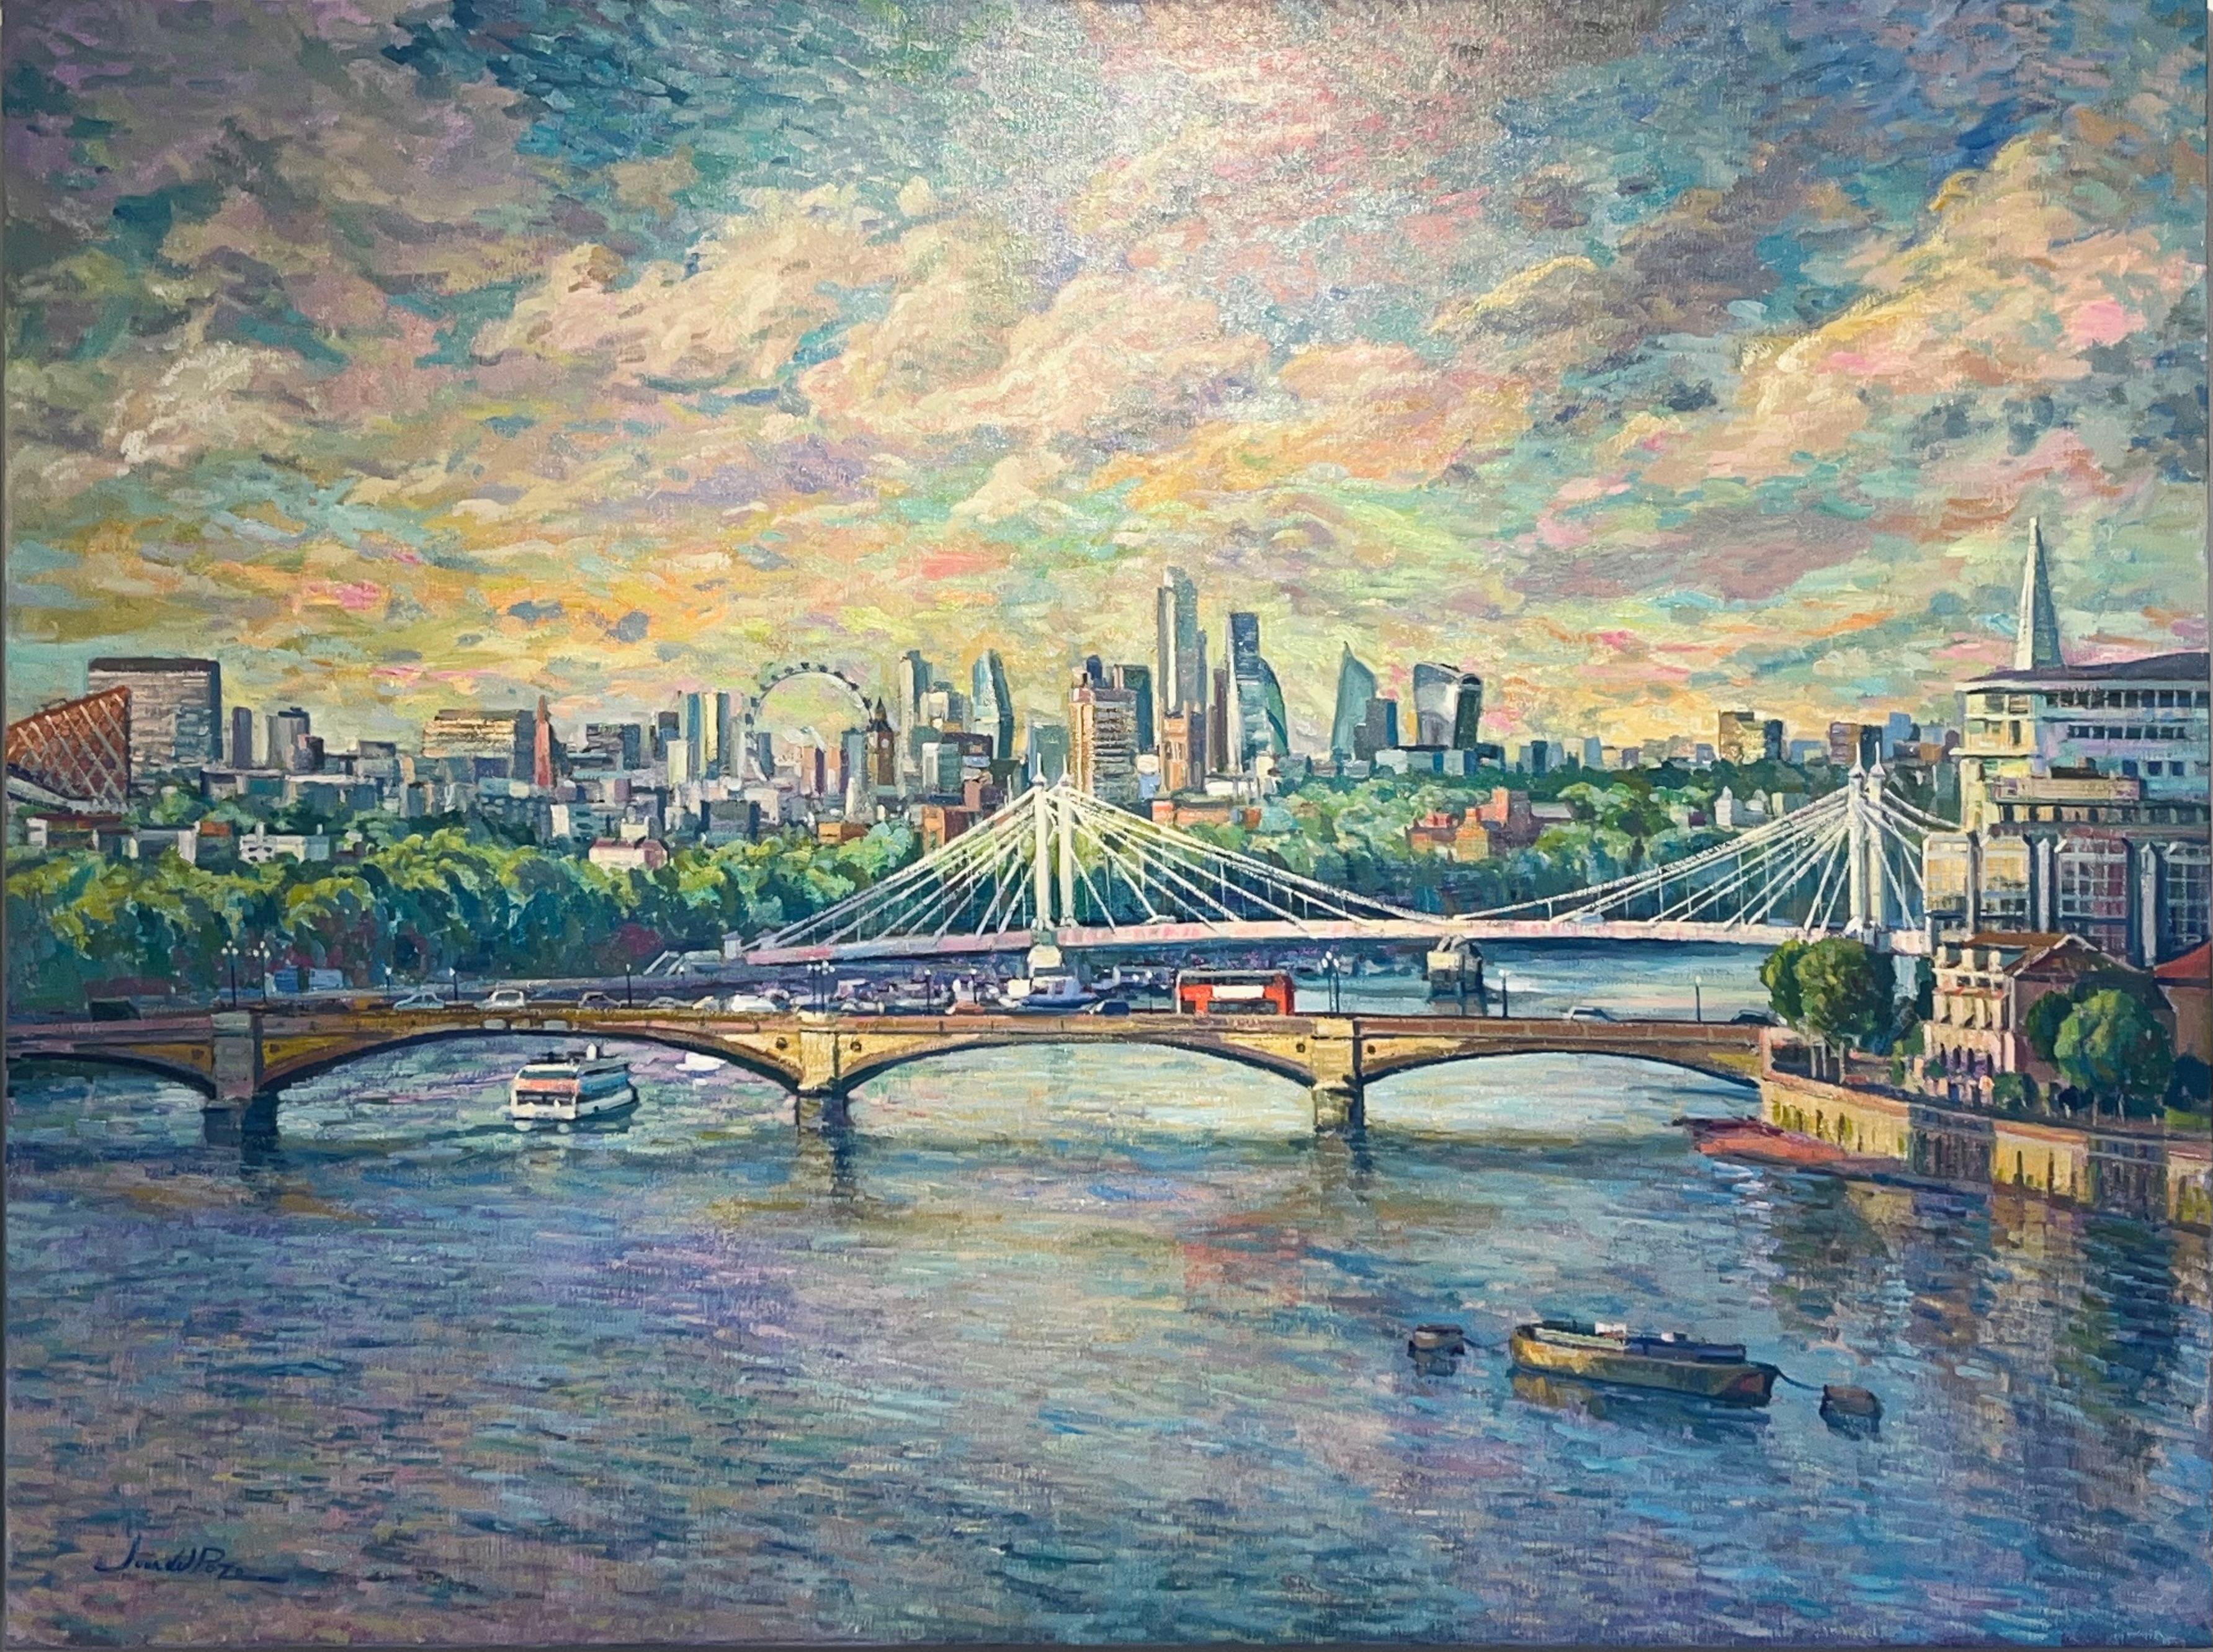 Juan del Pozo Figurative Painting - London Bridges - original impressionism cityscape oil painting-modern Art